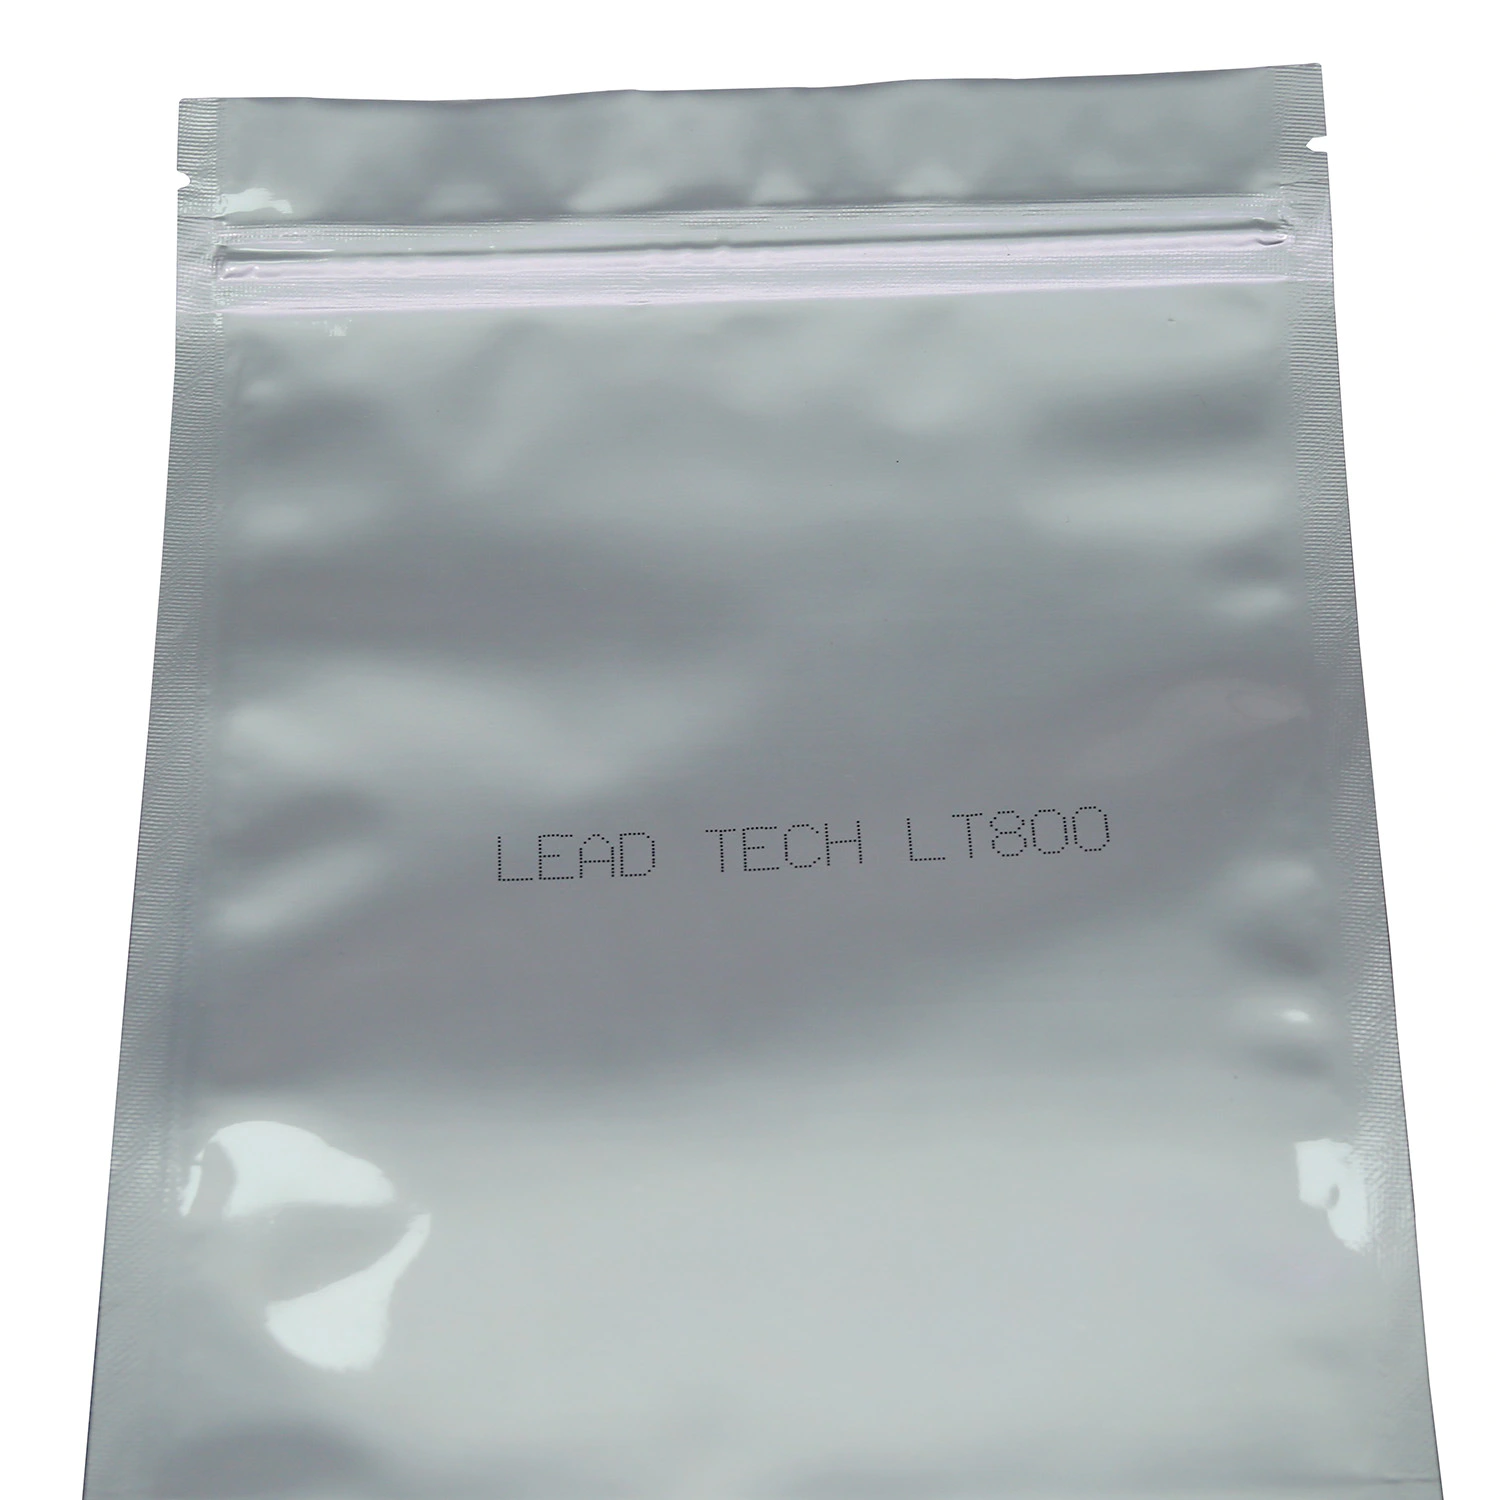 Lead Tech Lt800 PE Pipe Coding Cij Inkjet Printer